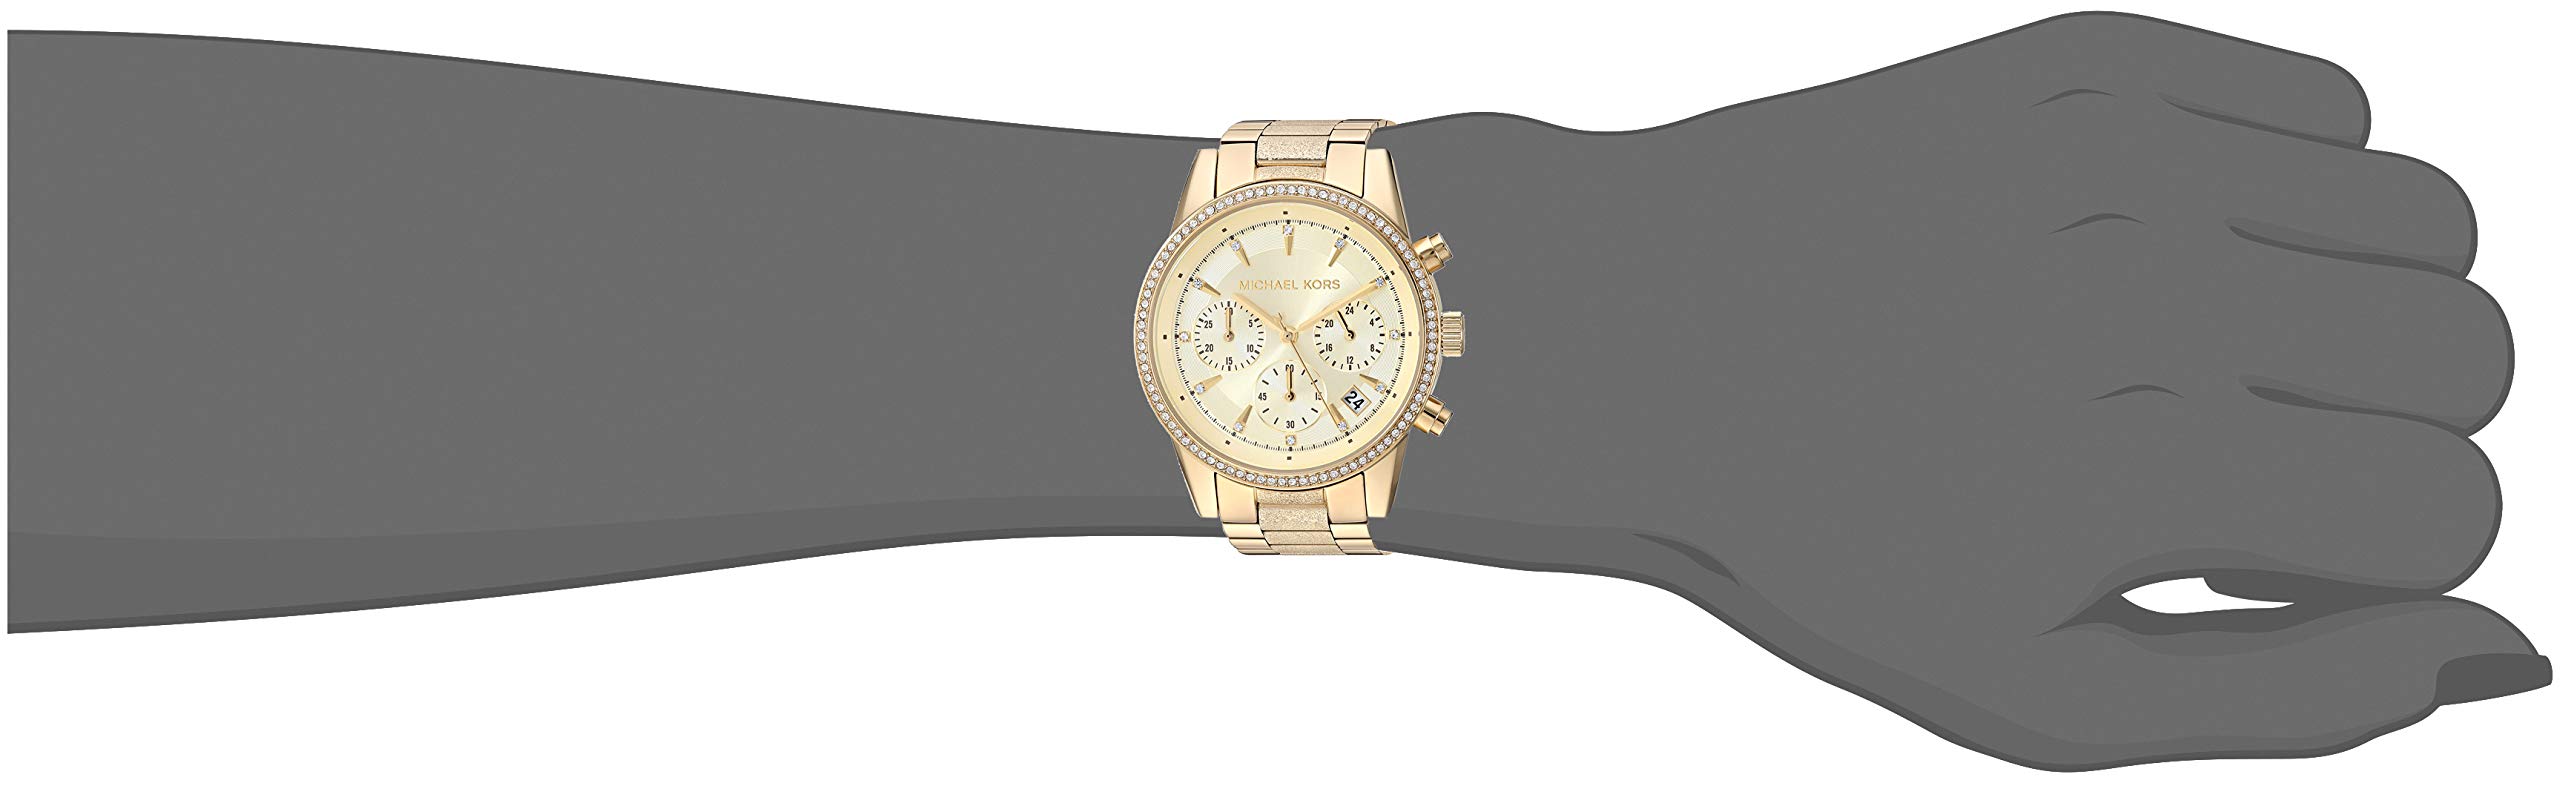 Michael Kors Women's Ritz Chronograph Gold Tone Stainless Steel Watch MK6597